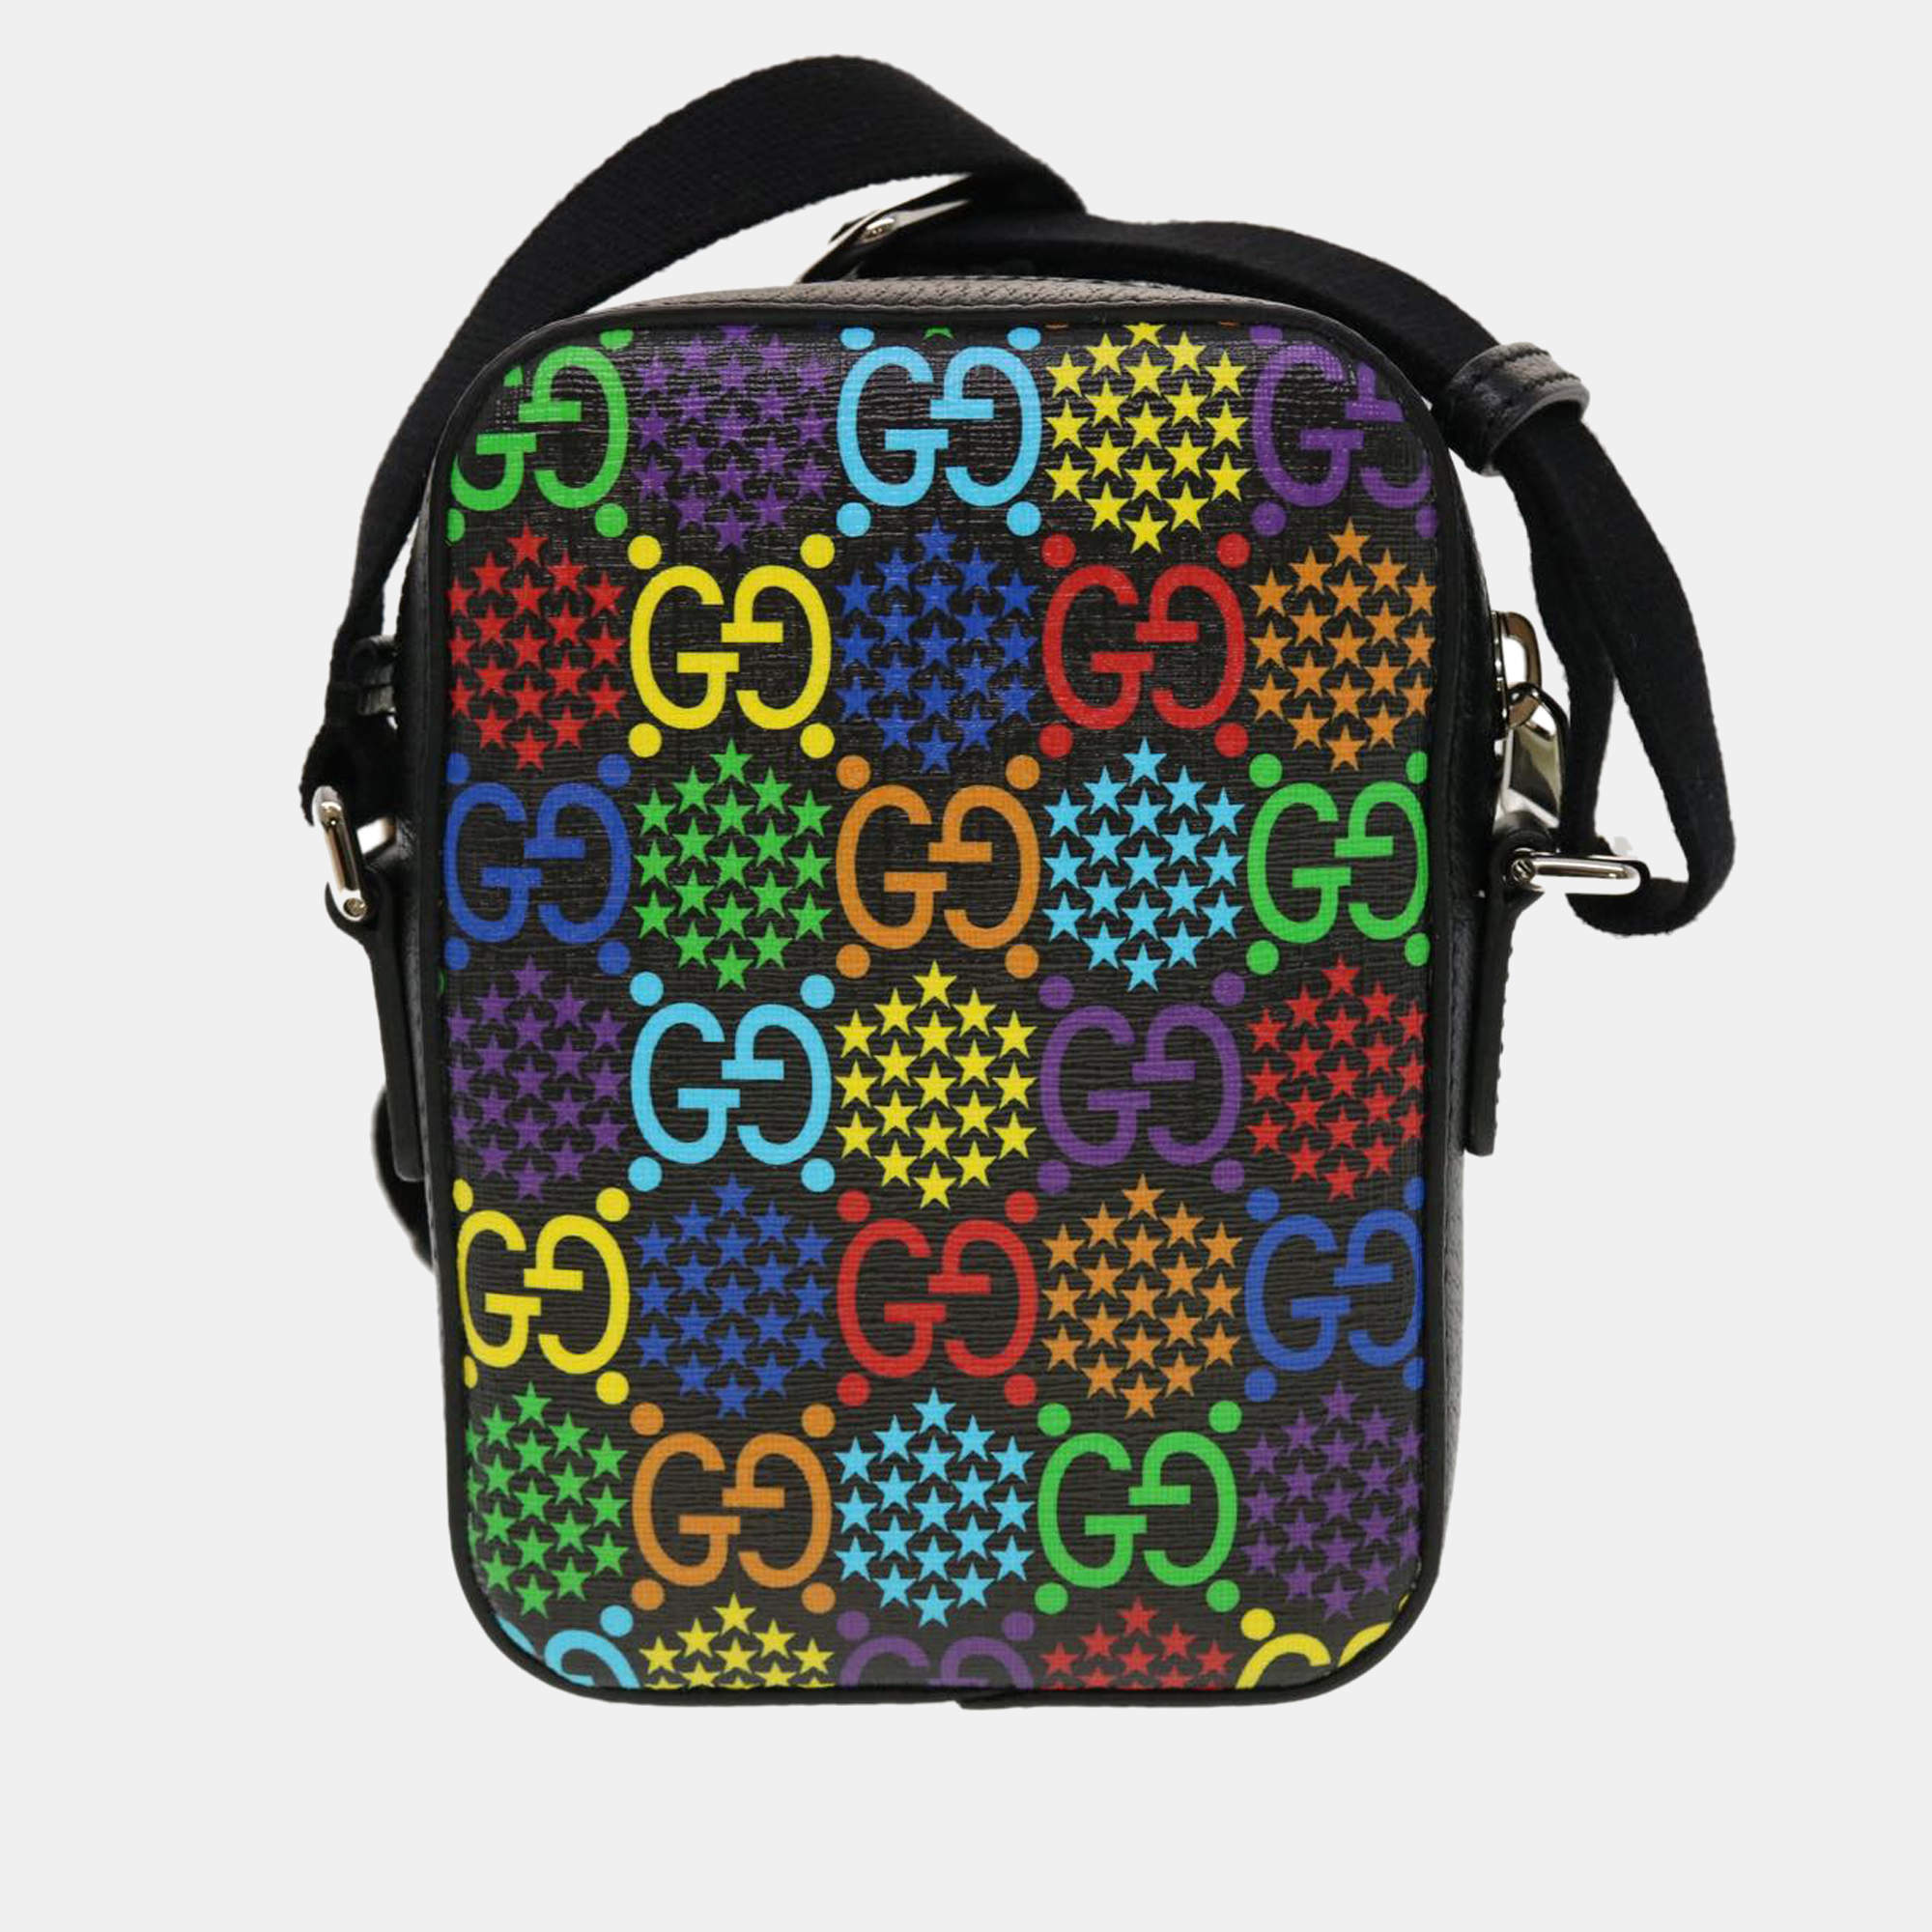 GG Supreme Psychedelic Crossbody Bag